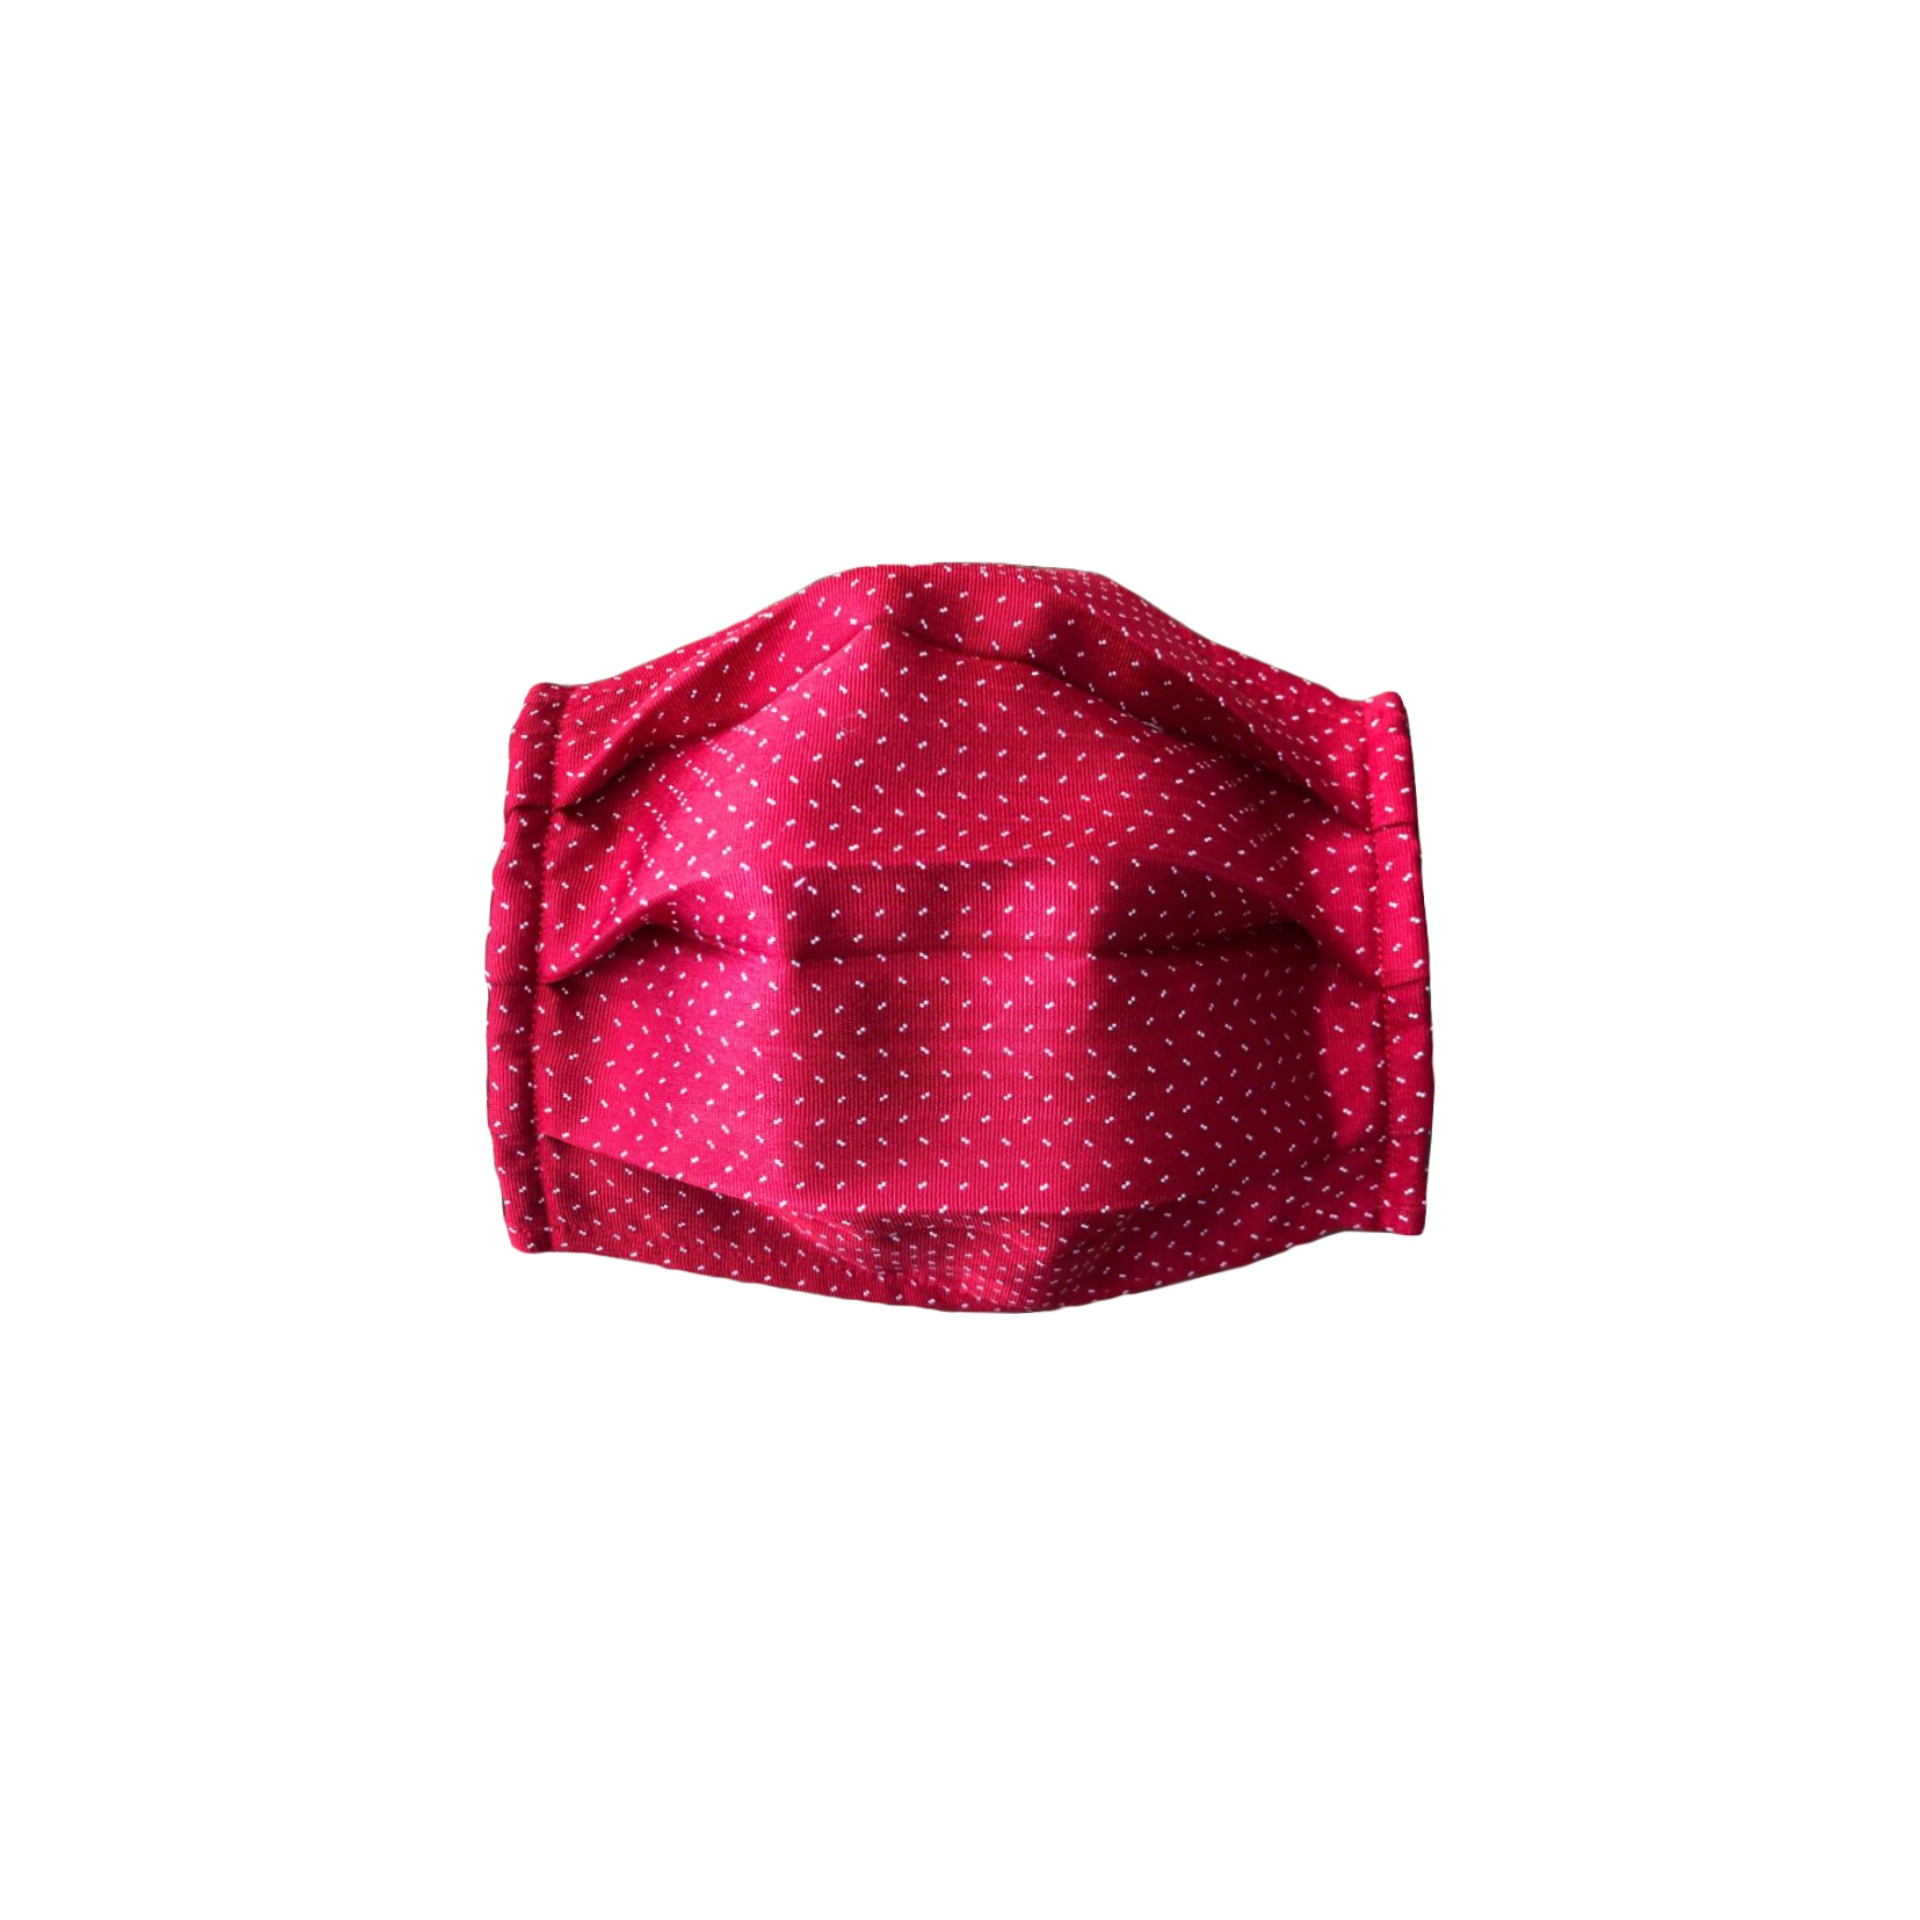 StyleMask Mascherina facciale filtrante in seta rossa puntaspillo